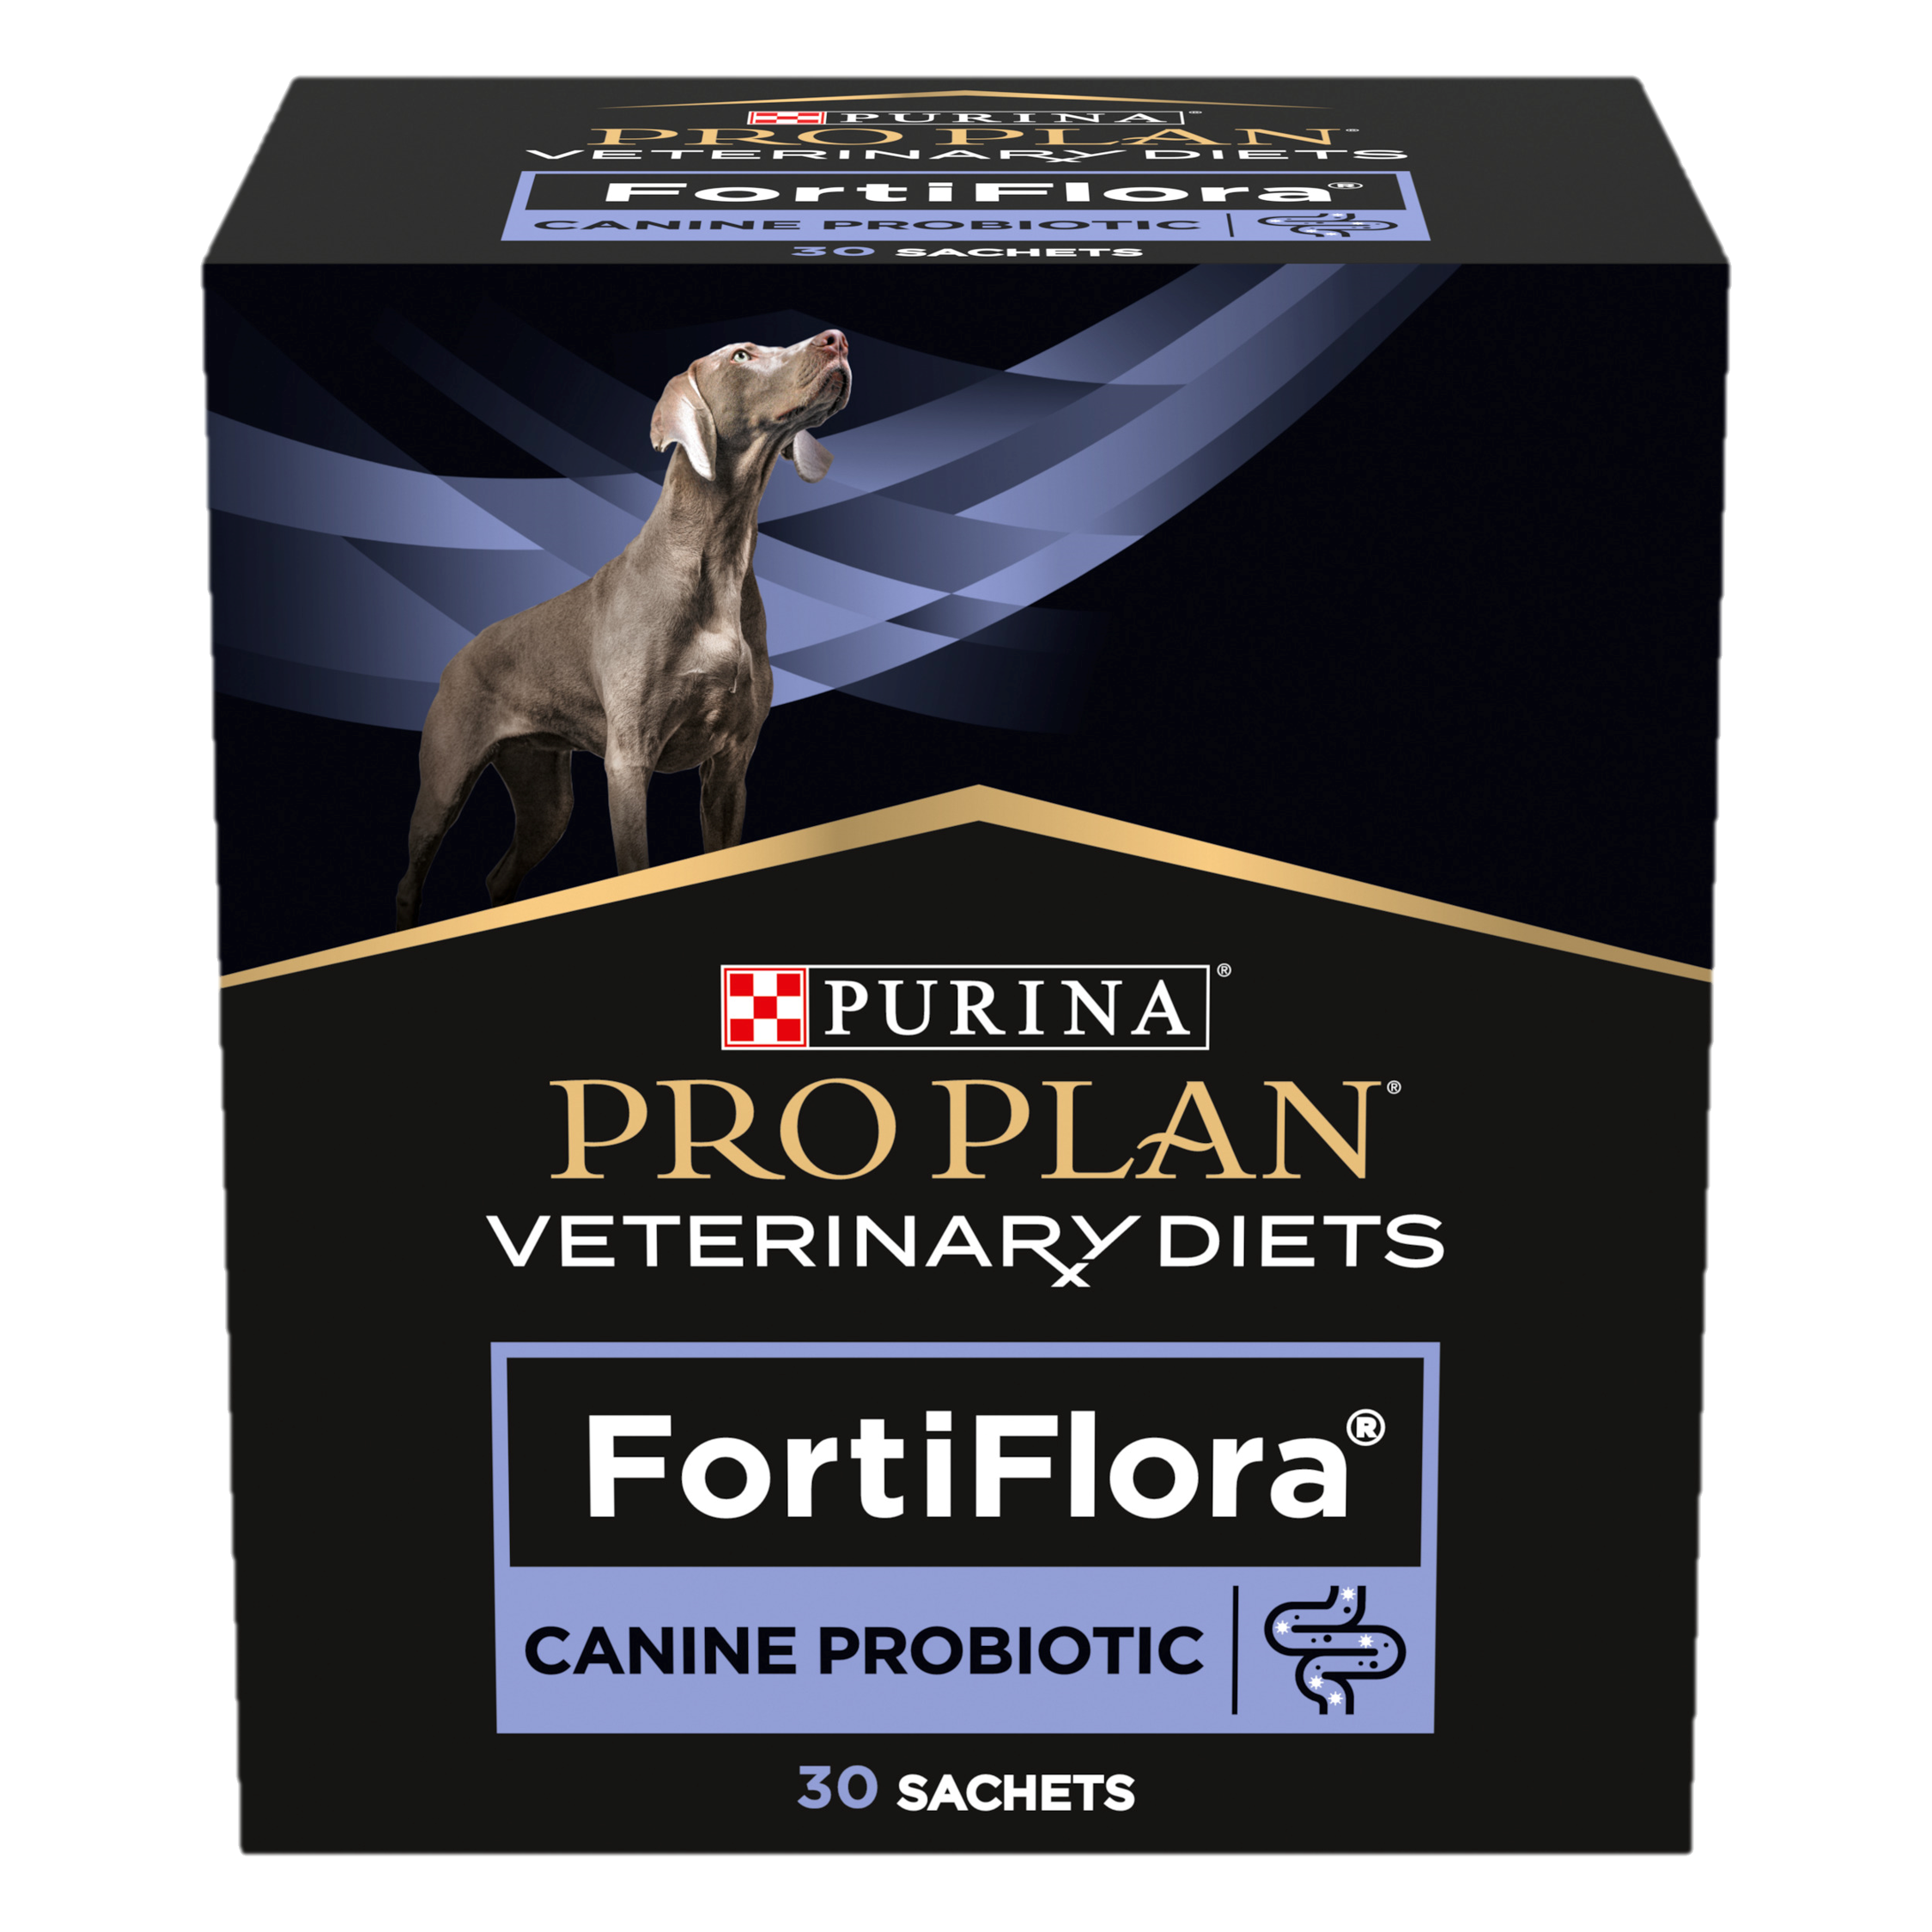 Purina Pro Plan FortiFlora Probiotic komplement Hund